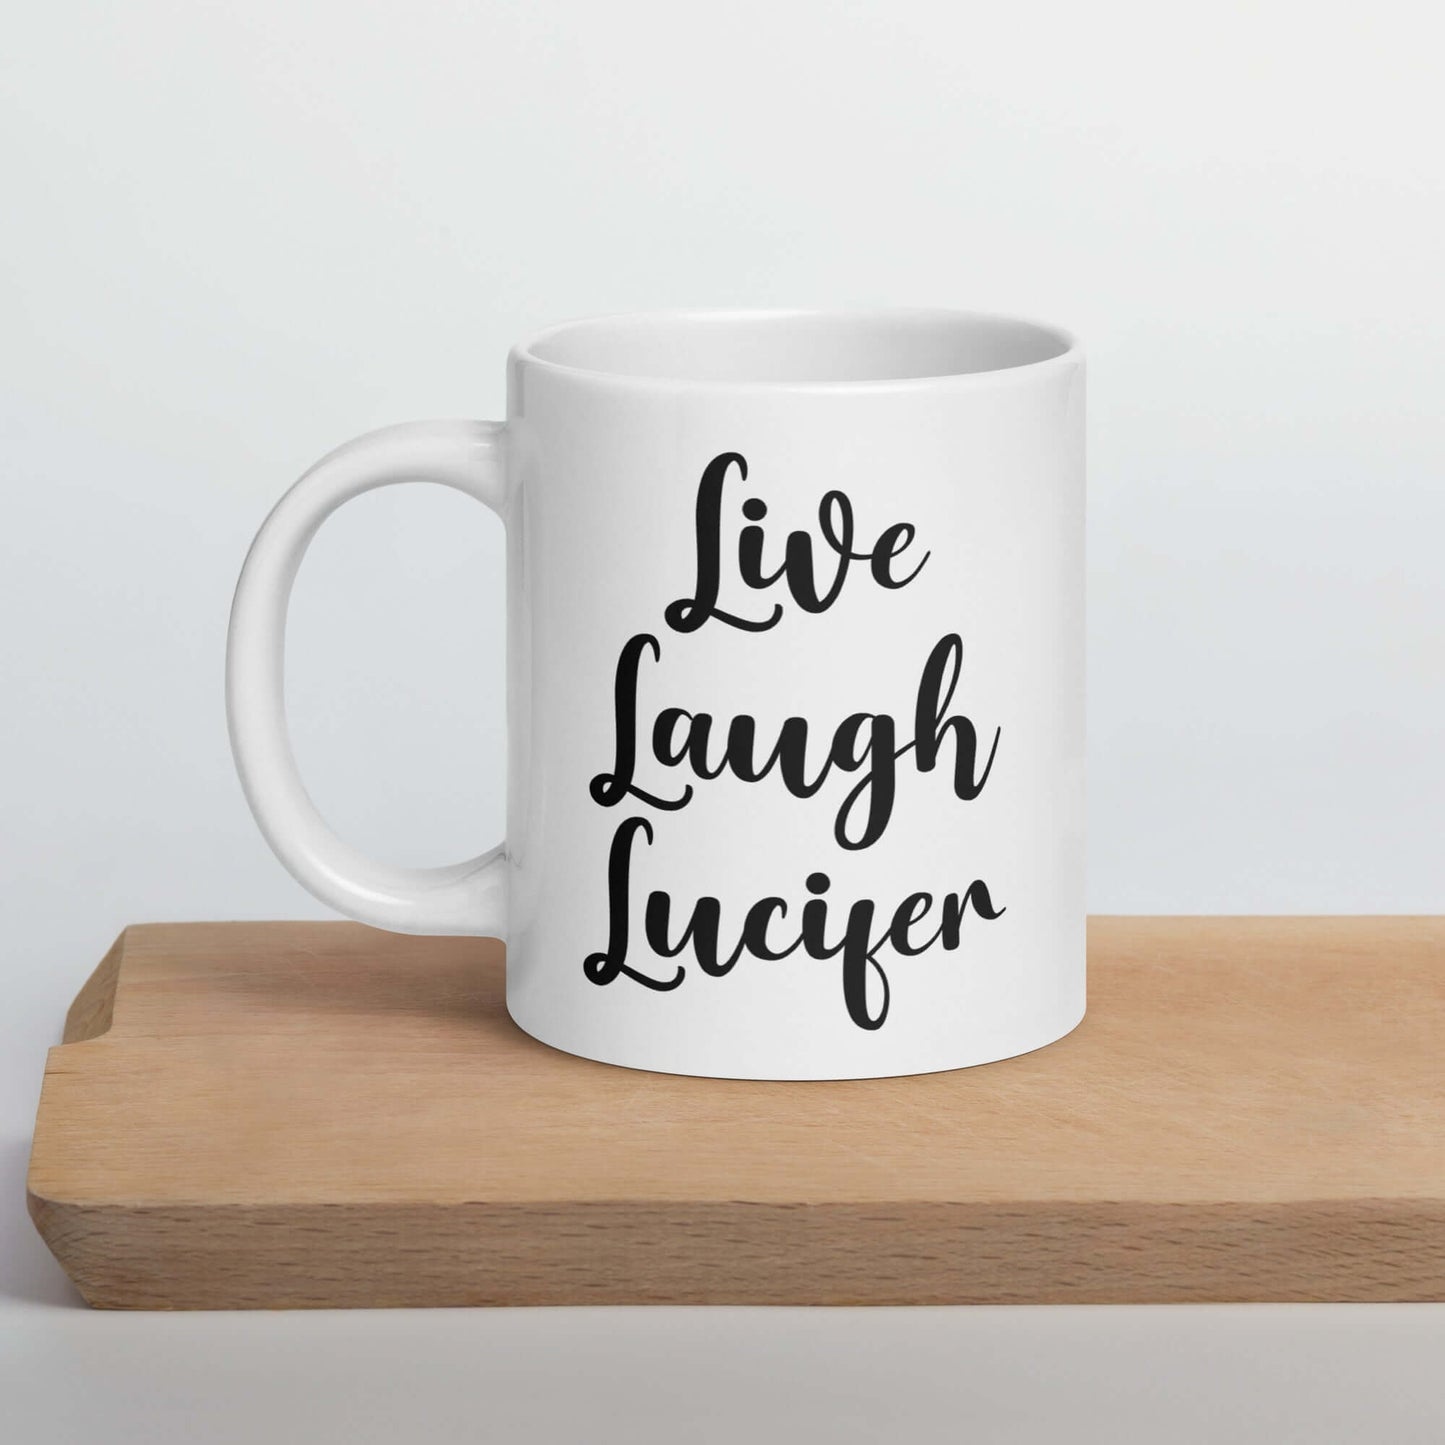 Live Laugh Love parody ceramic coffee mug